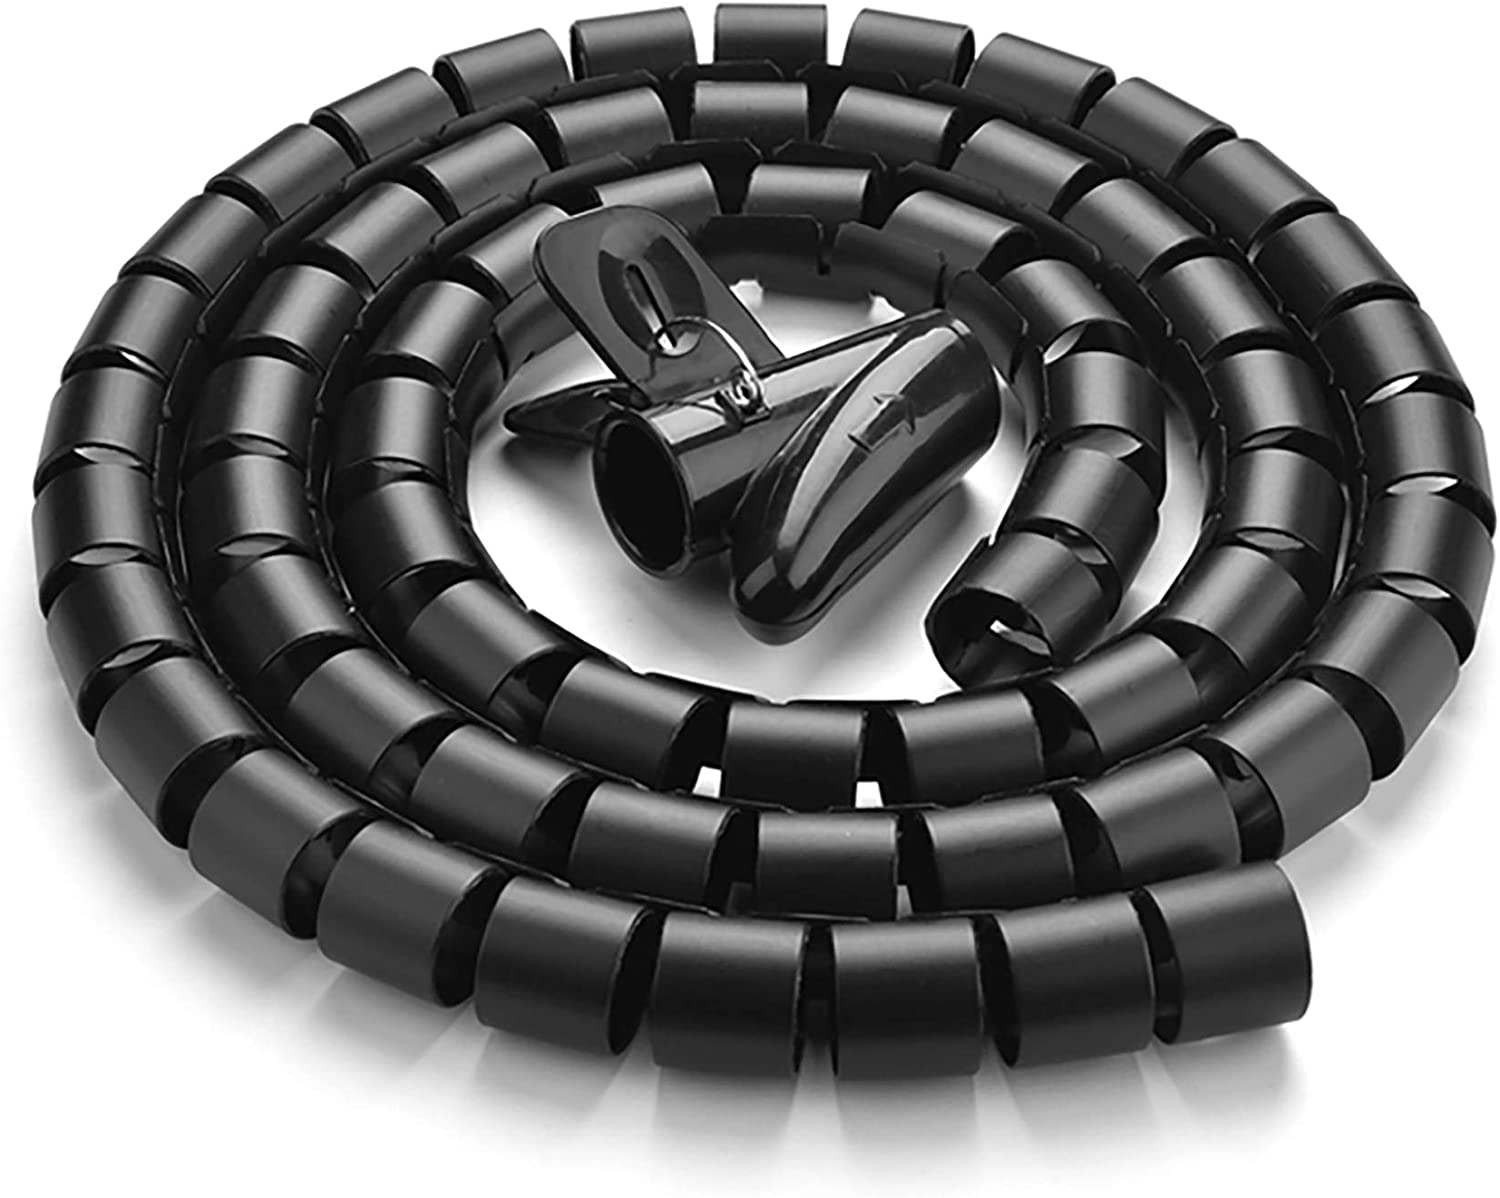 Reliancer 10FT Cable Management Sleeve EZ Cord Bundler 1" Black